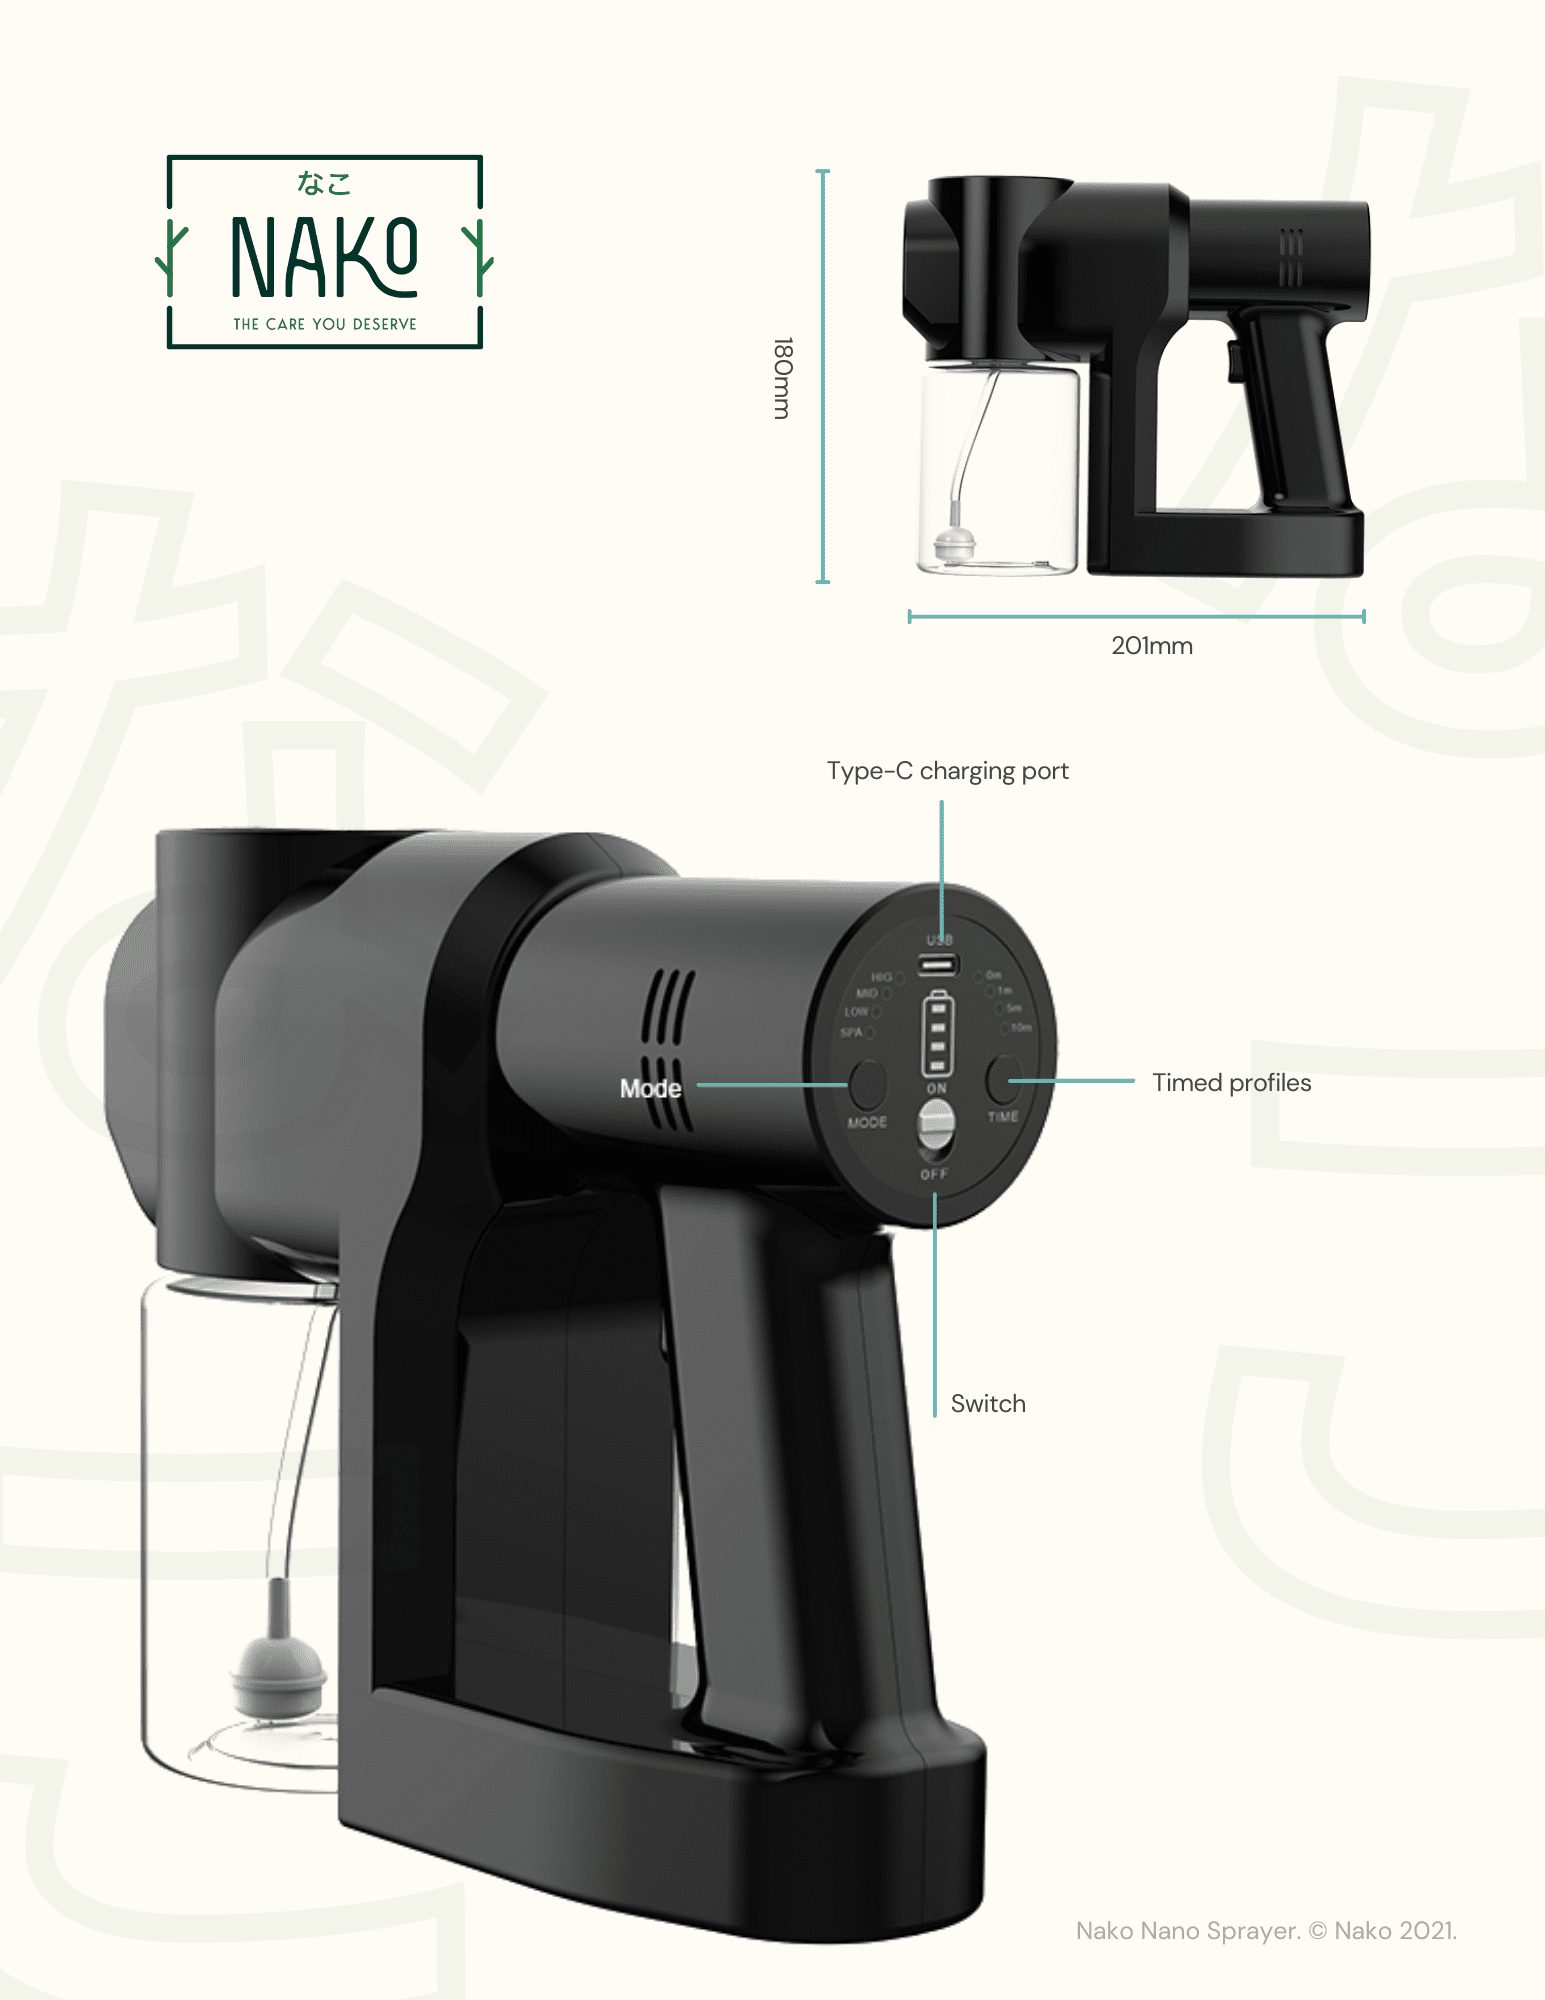 nako nano sprayer product brochure 2